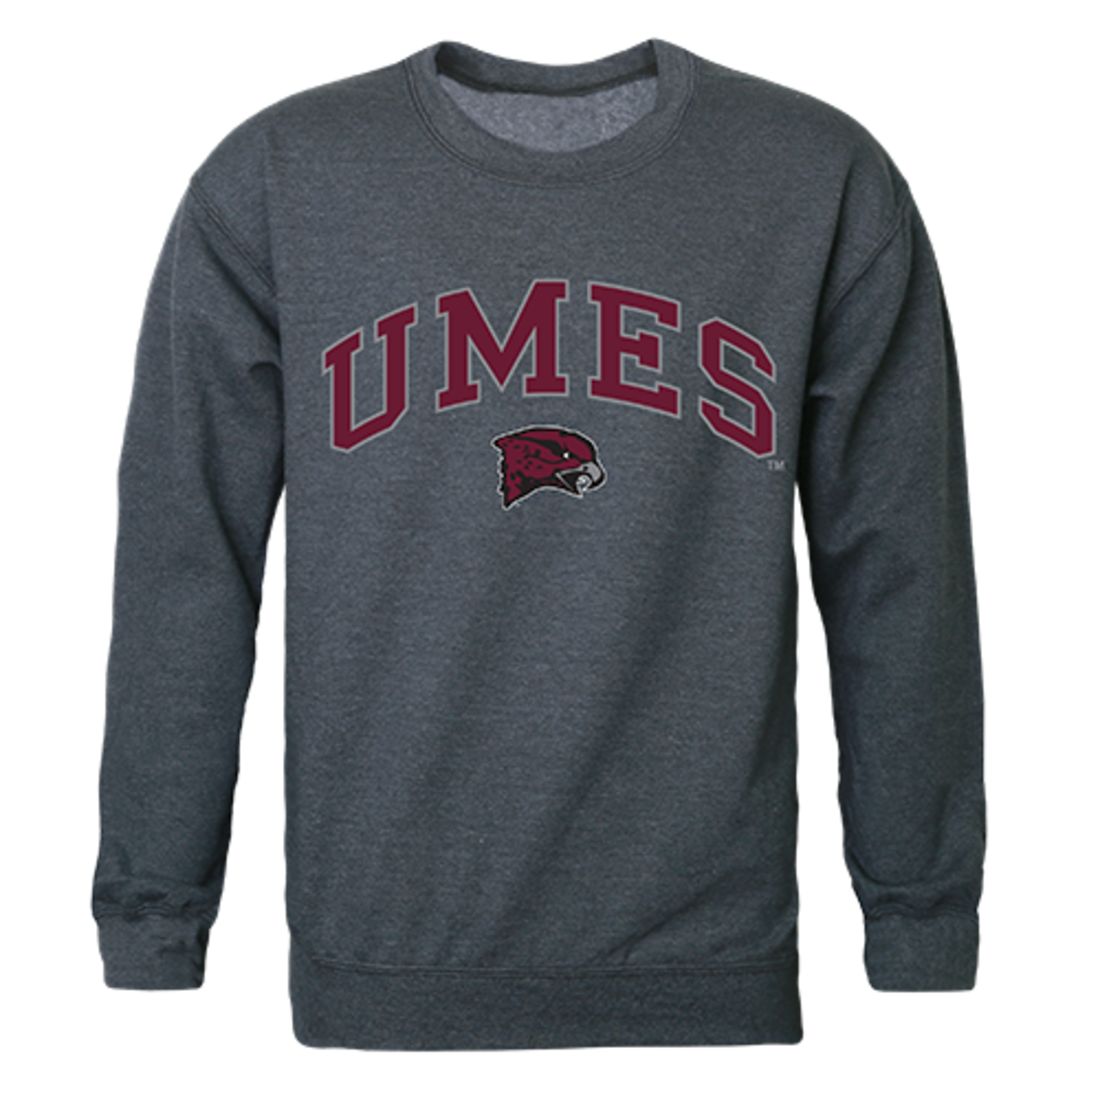 UMES University of Maryland Eastern Shore Campus Crewneck Pullover Sweatshirt Sweater Heather Charcoal-Campus-Wardrobe